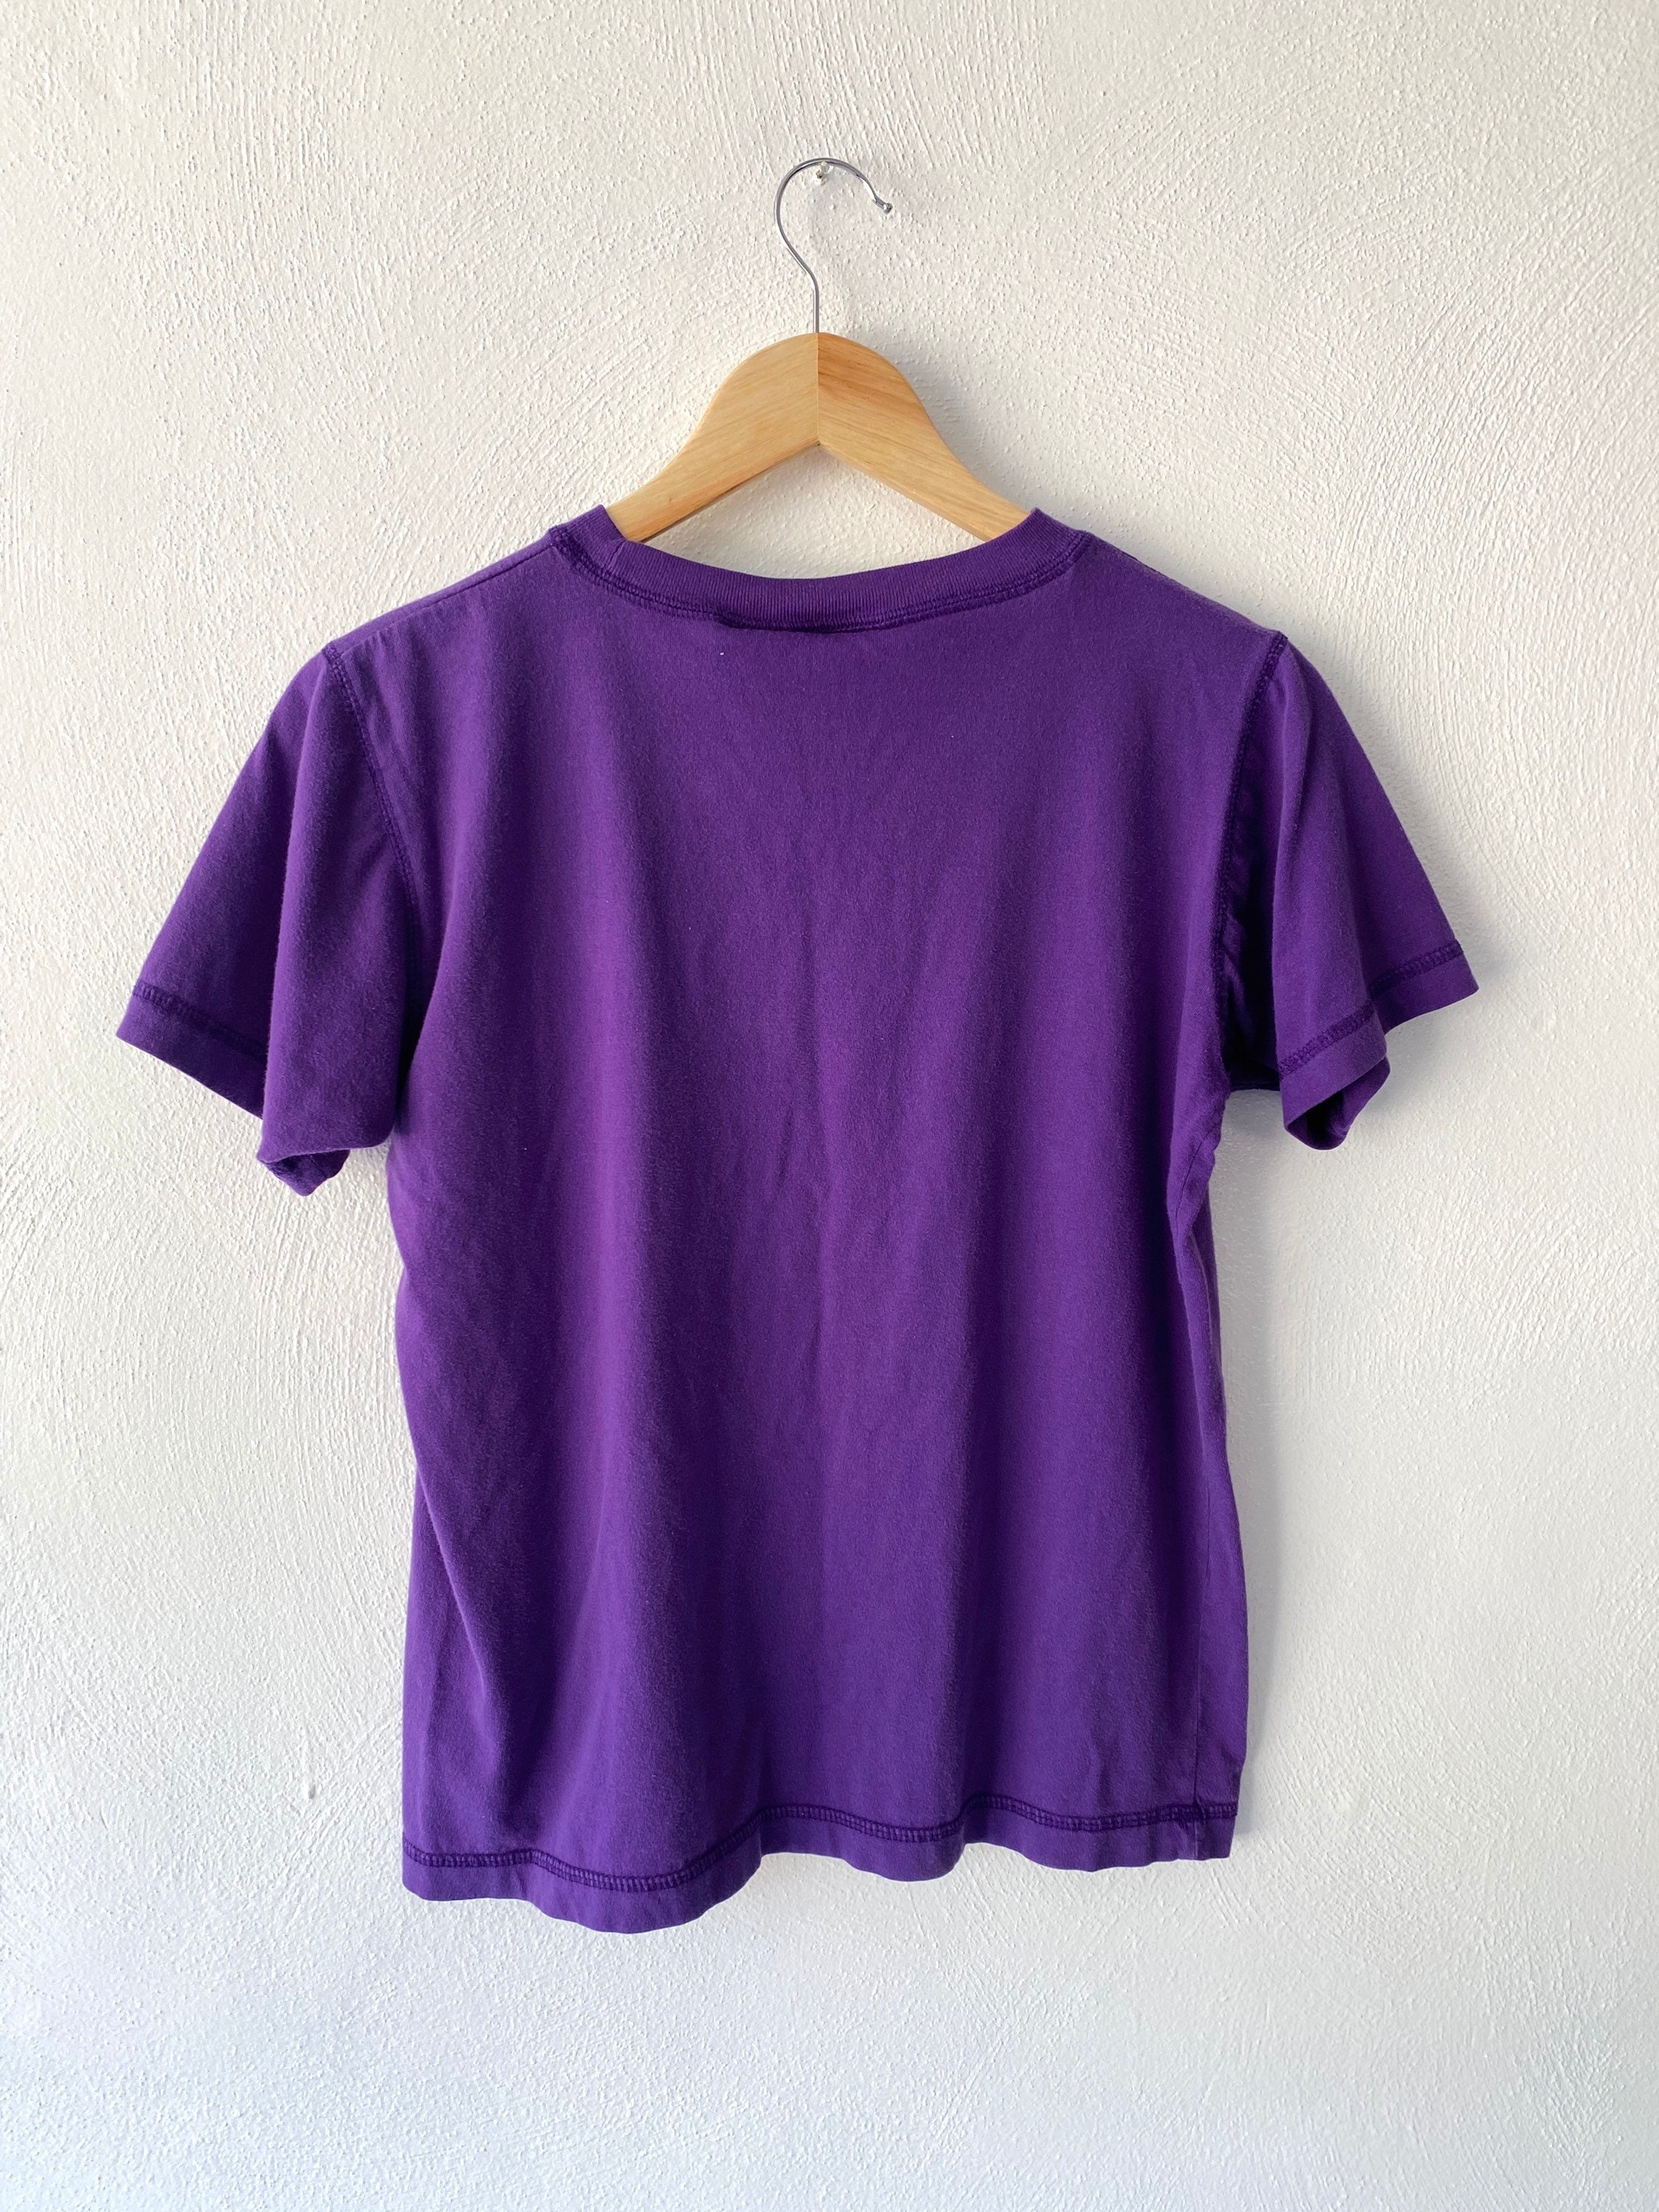 Vintage Basic T-Shirt Vintage Blank T-Shirt 90s Purple Tee | Etsy